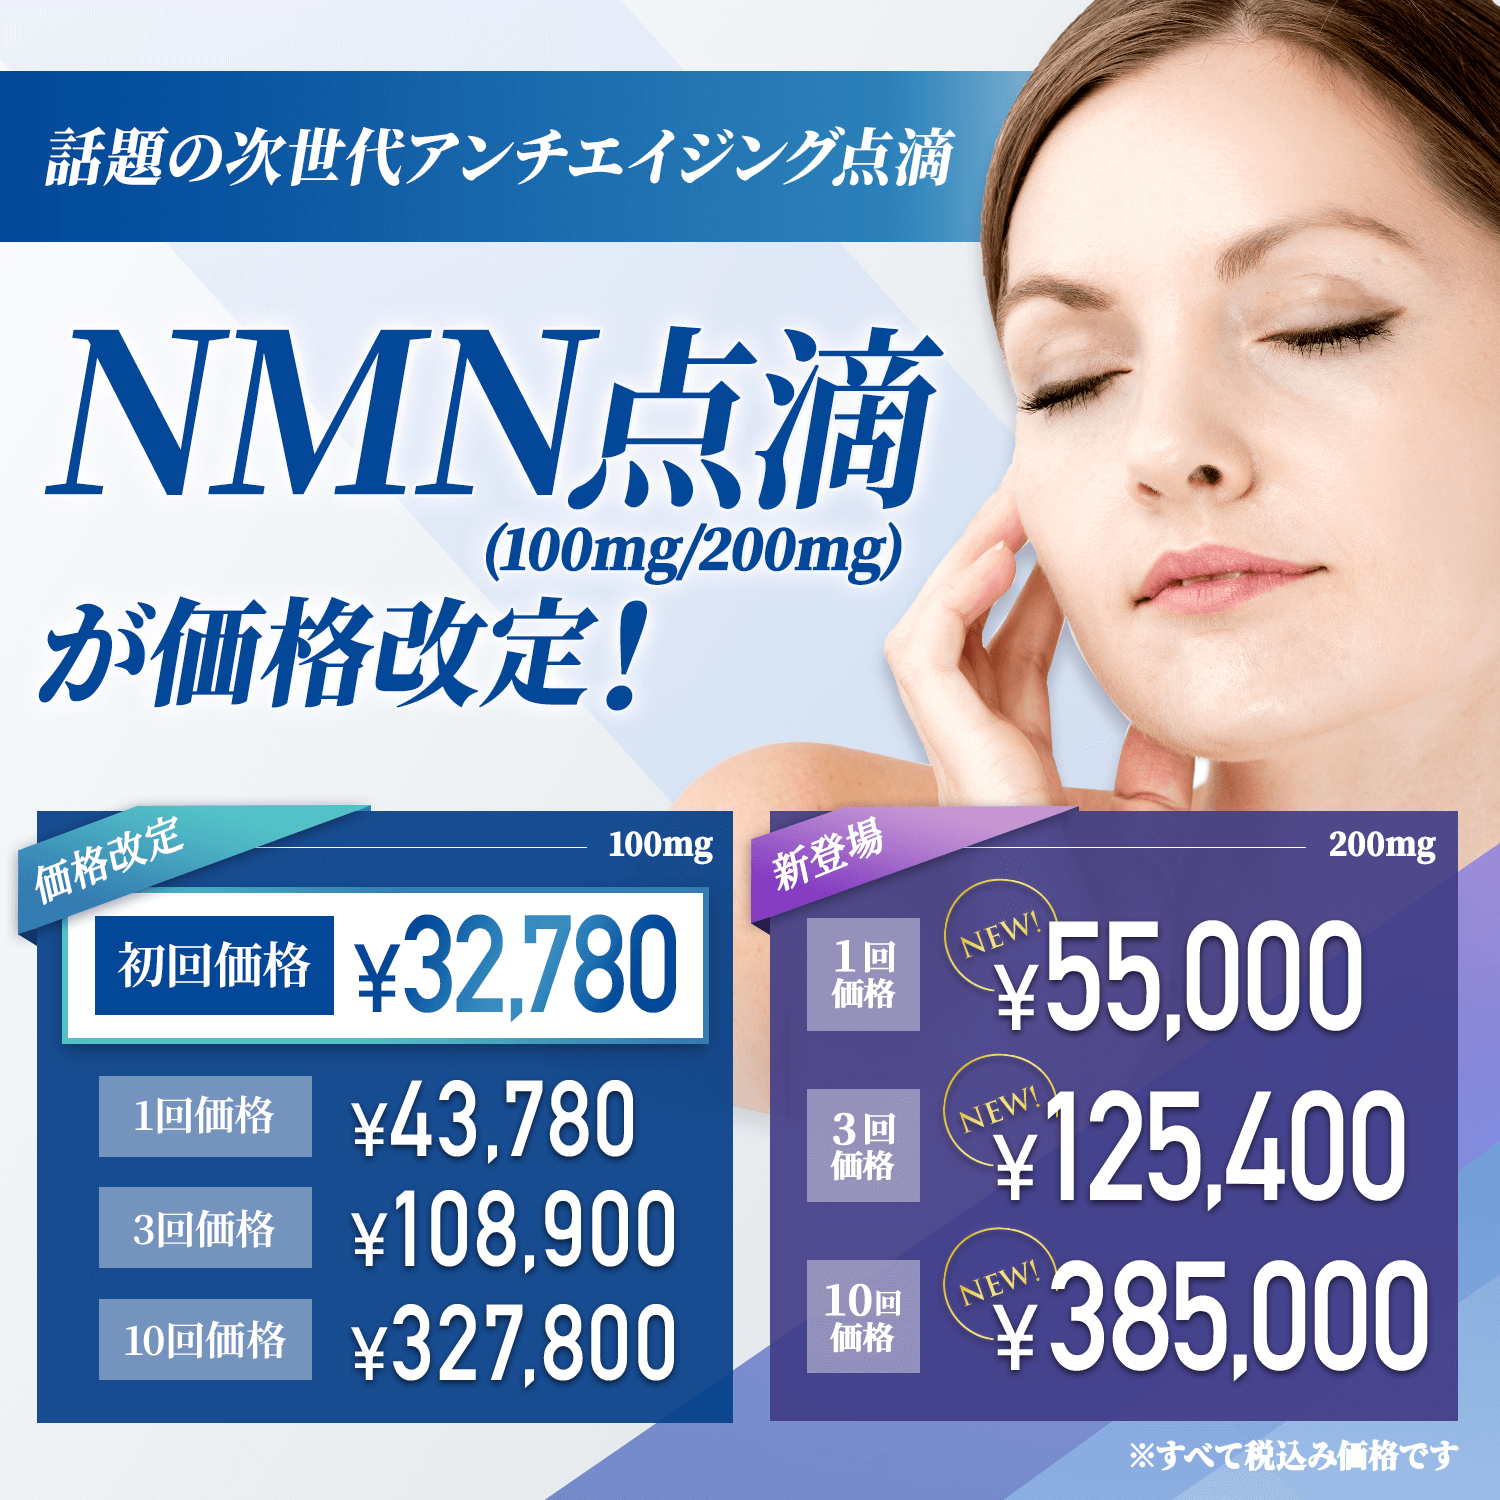 NMN点滴が価格改定！話題の次世代アンチエイジング点滴